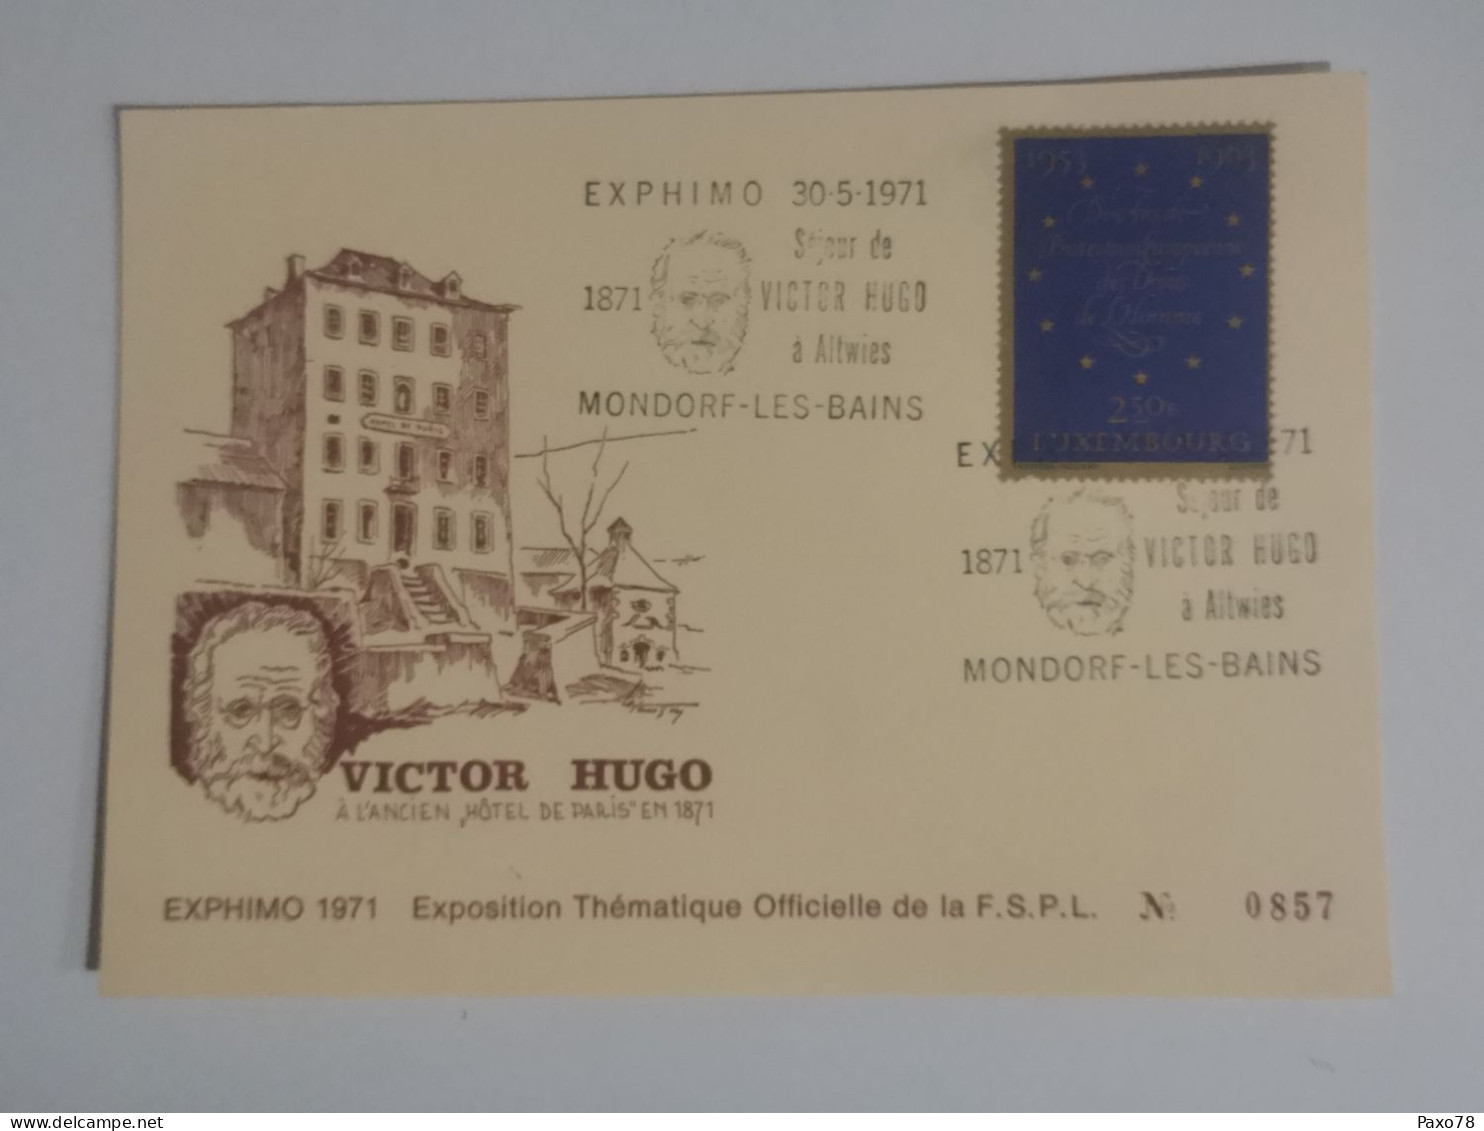 Victor Hugo, Exphimo 1971 - Cartes Commémoratives